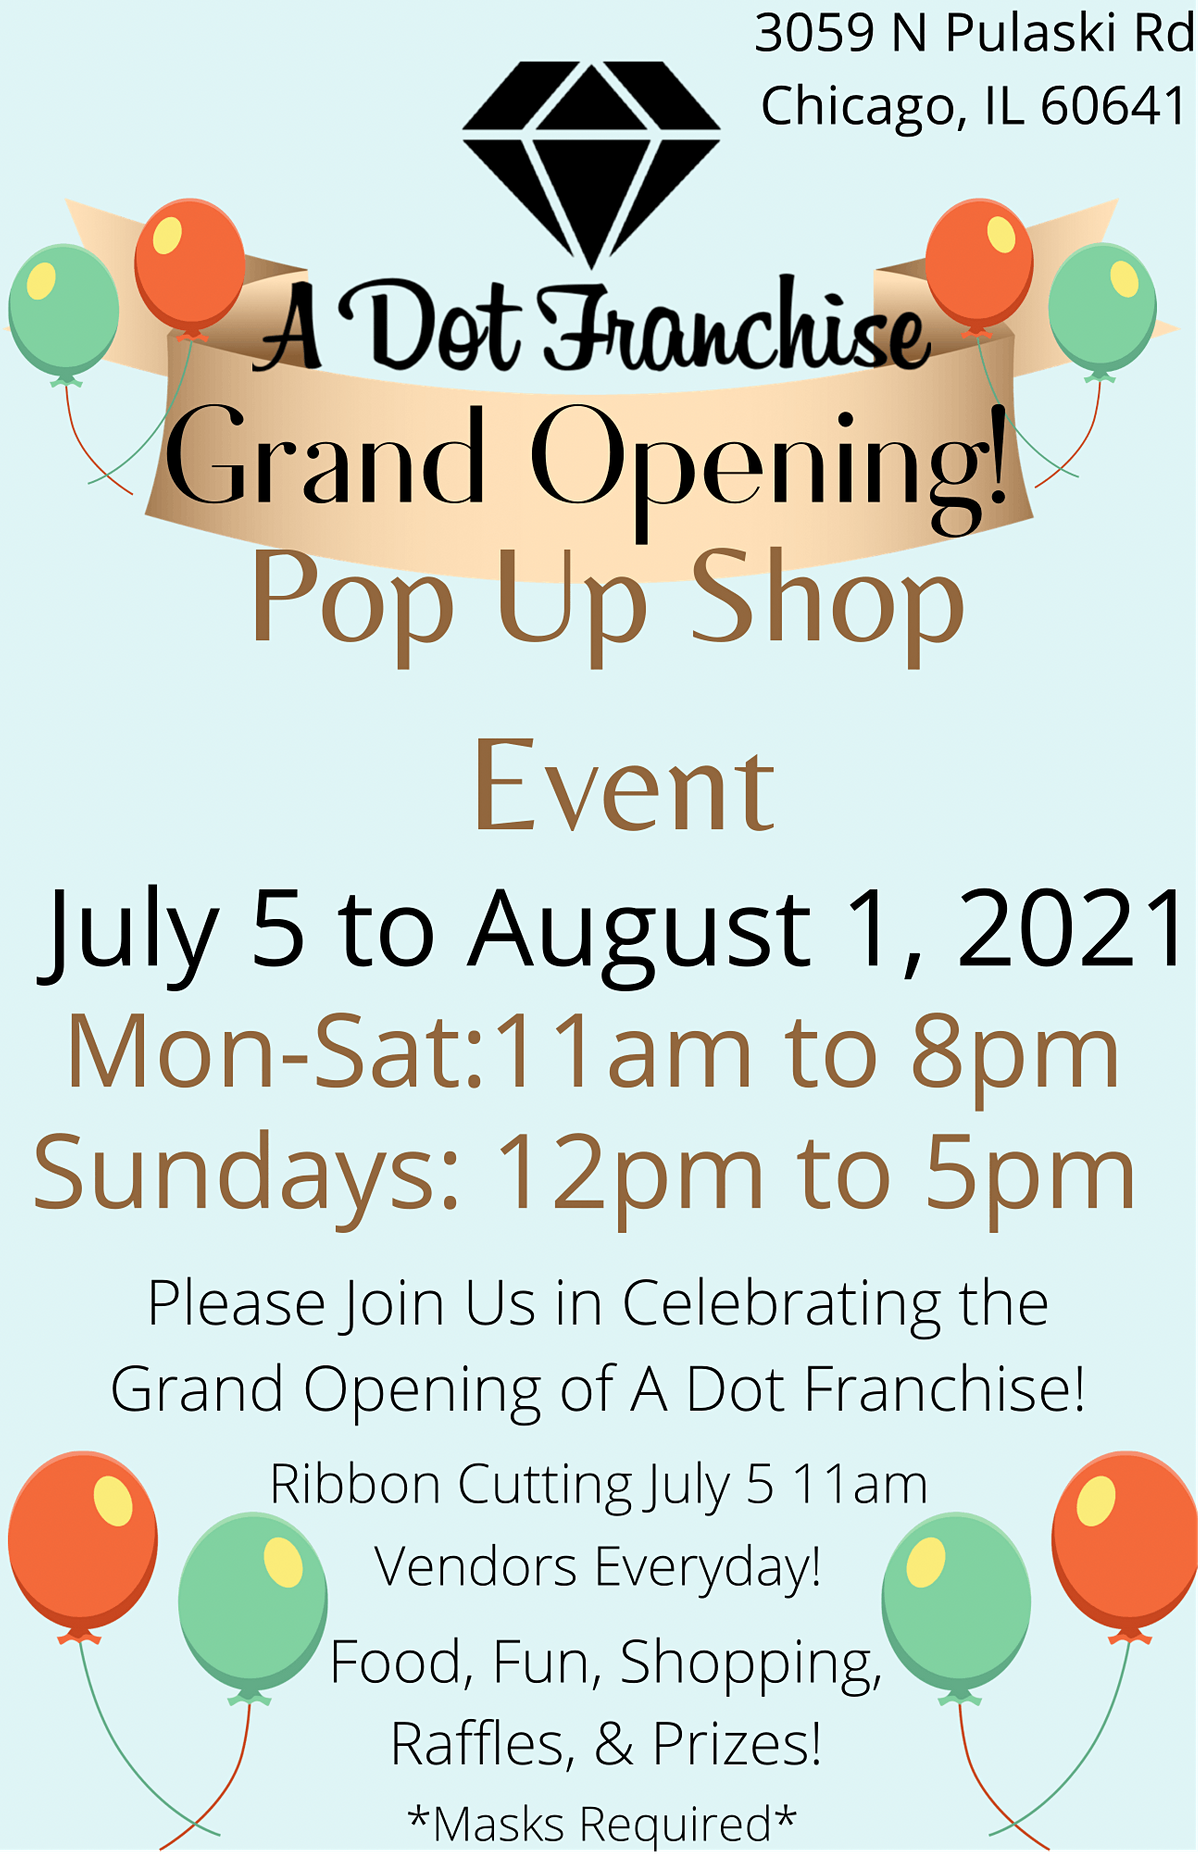 A Dot Franchise Grand Opening Pop Up Shop